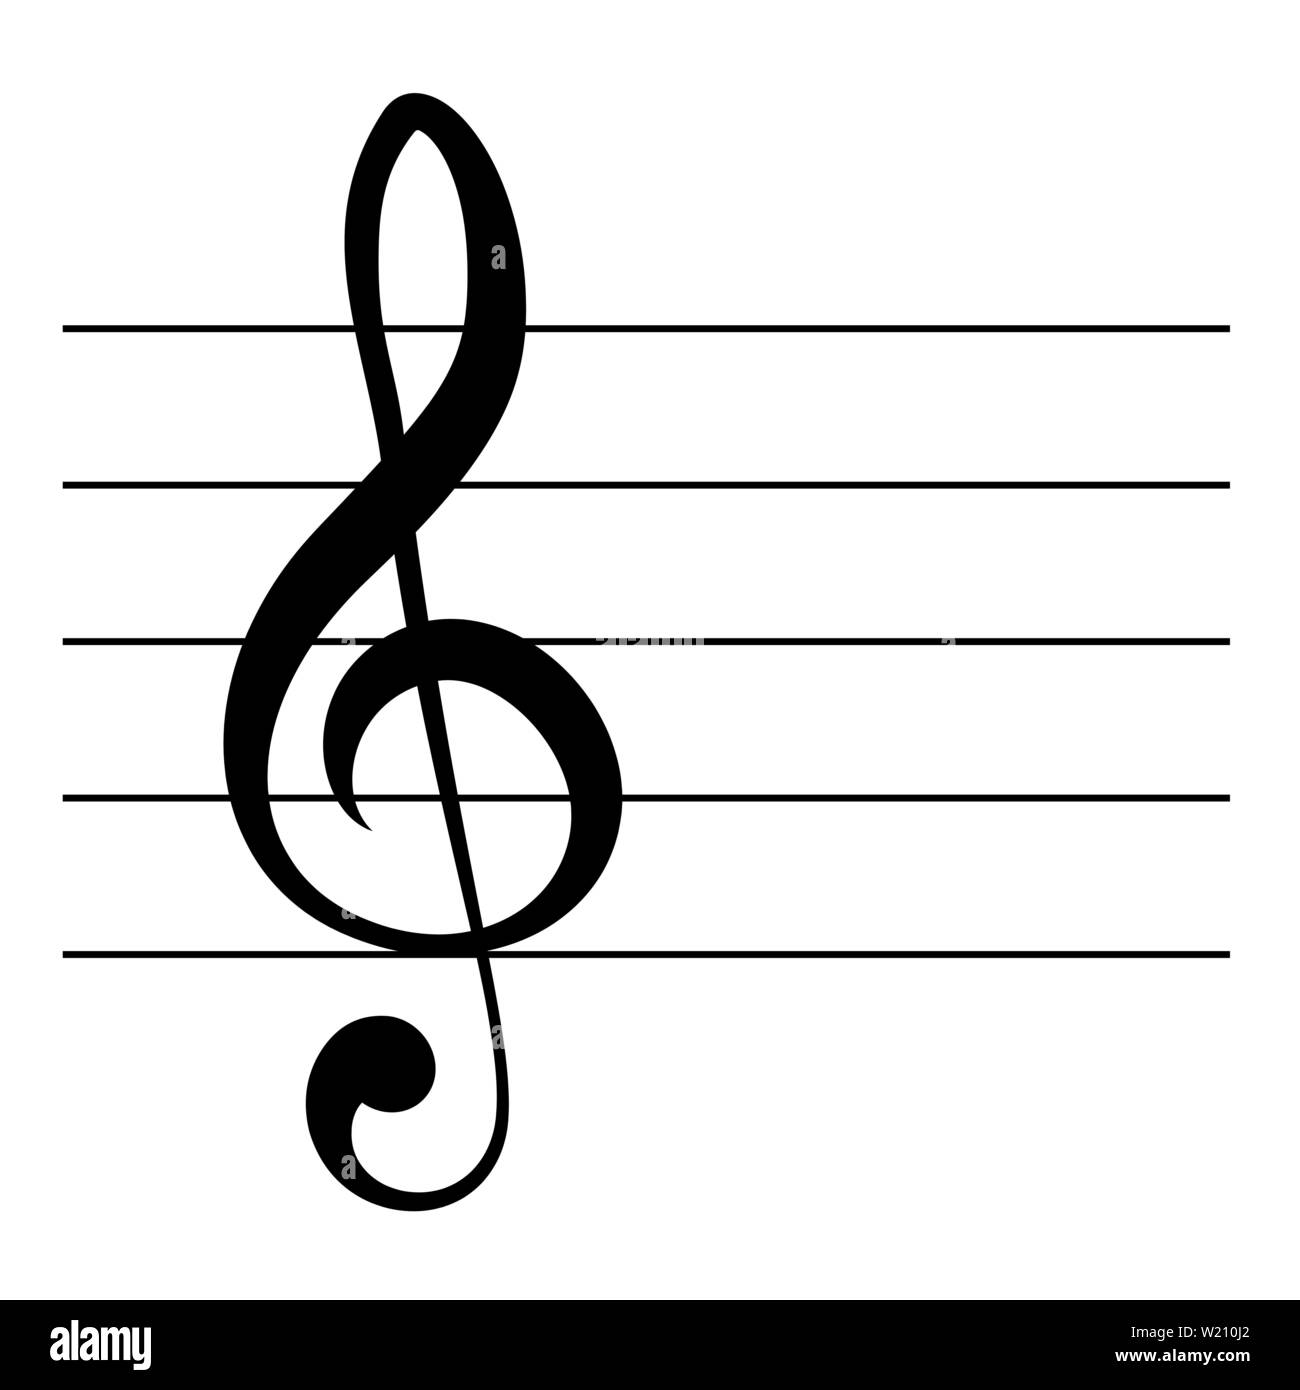 Treble clef symbol on the musical score Stock Vector